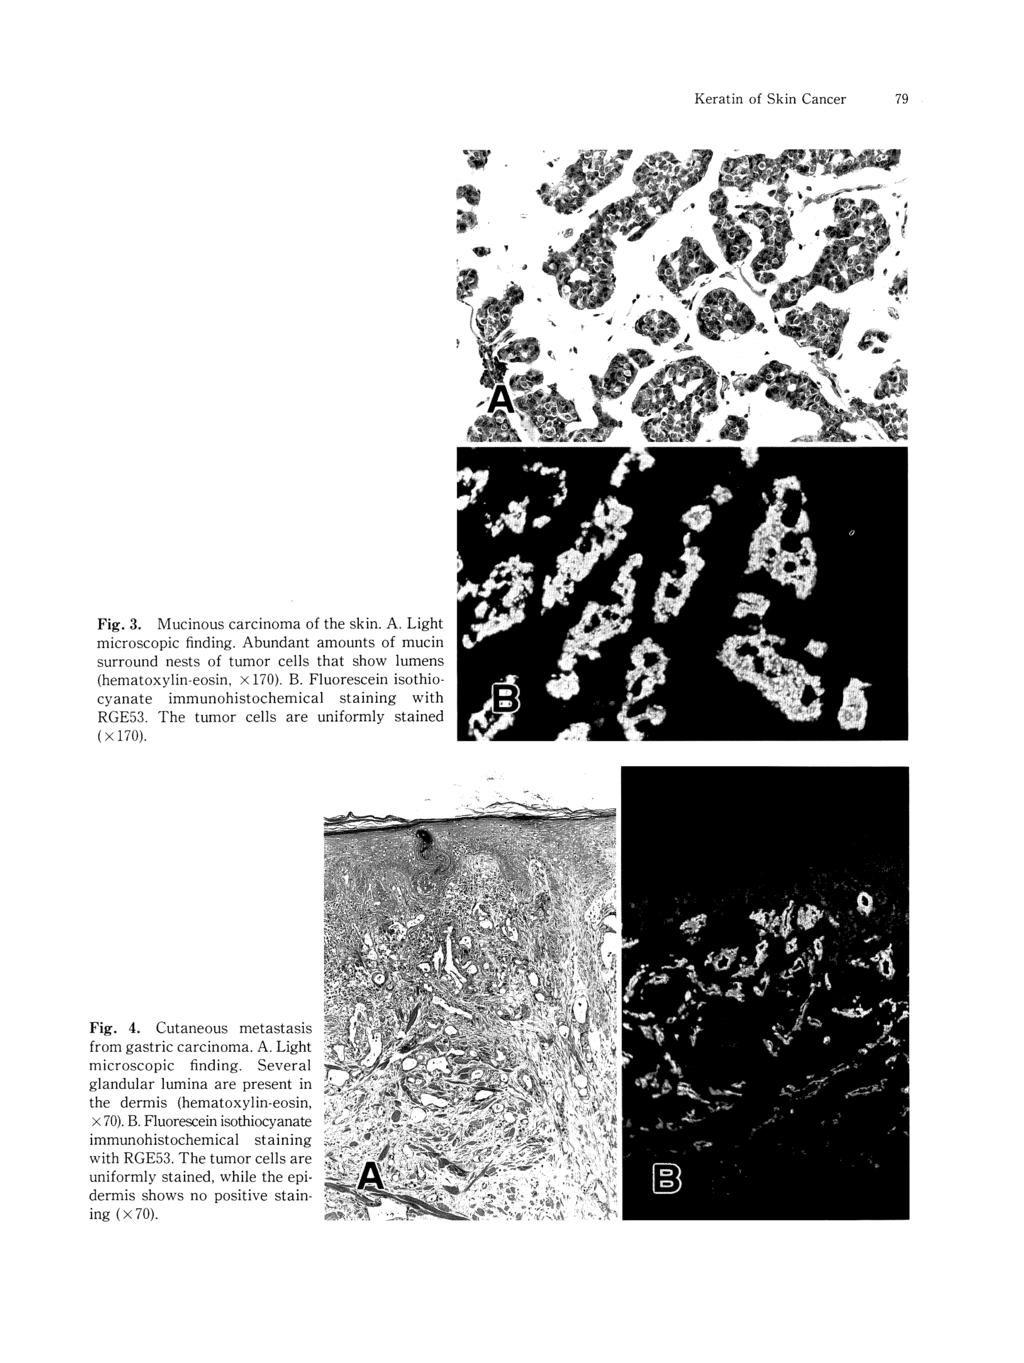 Keratin of Skin Cancer 79 Fig. 3. Mucinous carcinoma of the skin. A. Light microscopic finding. Abundant amounts of mucin surround nests of tumor cells that show lumens (hematoxylin-eosin, x 170). B.